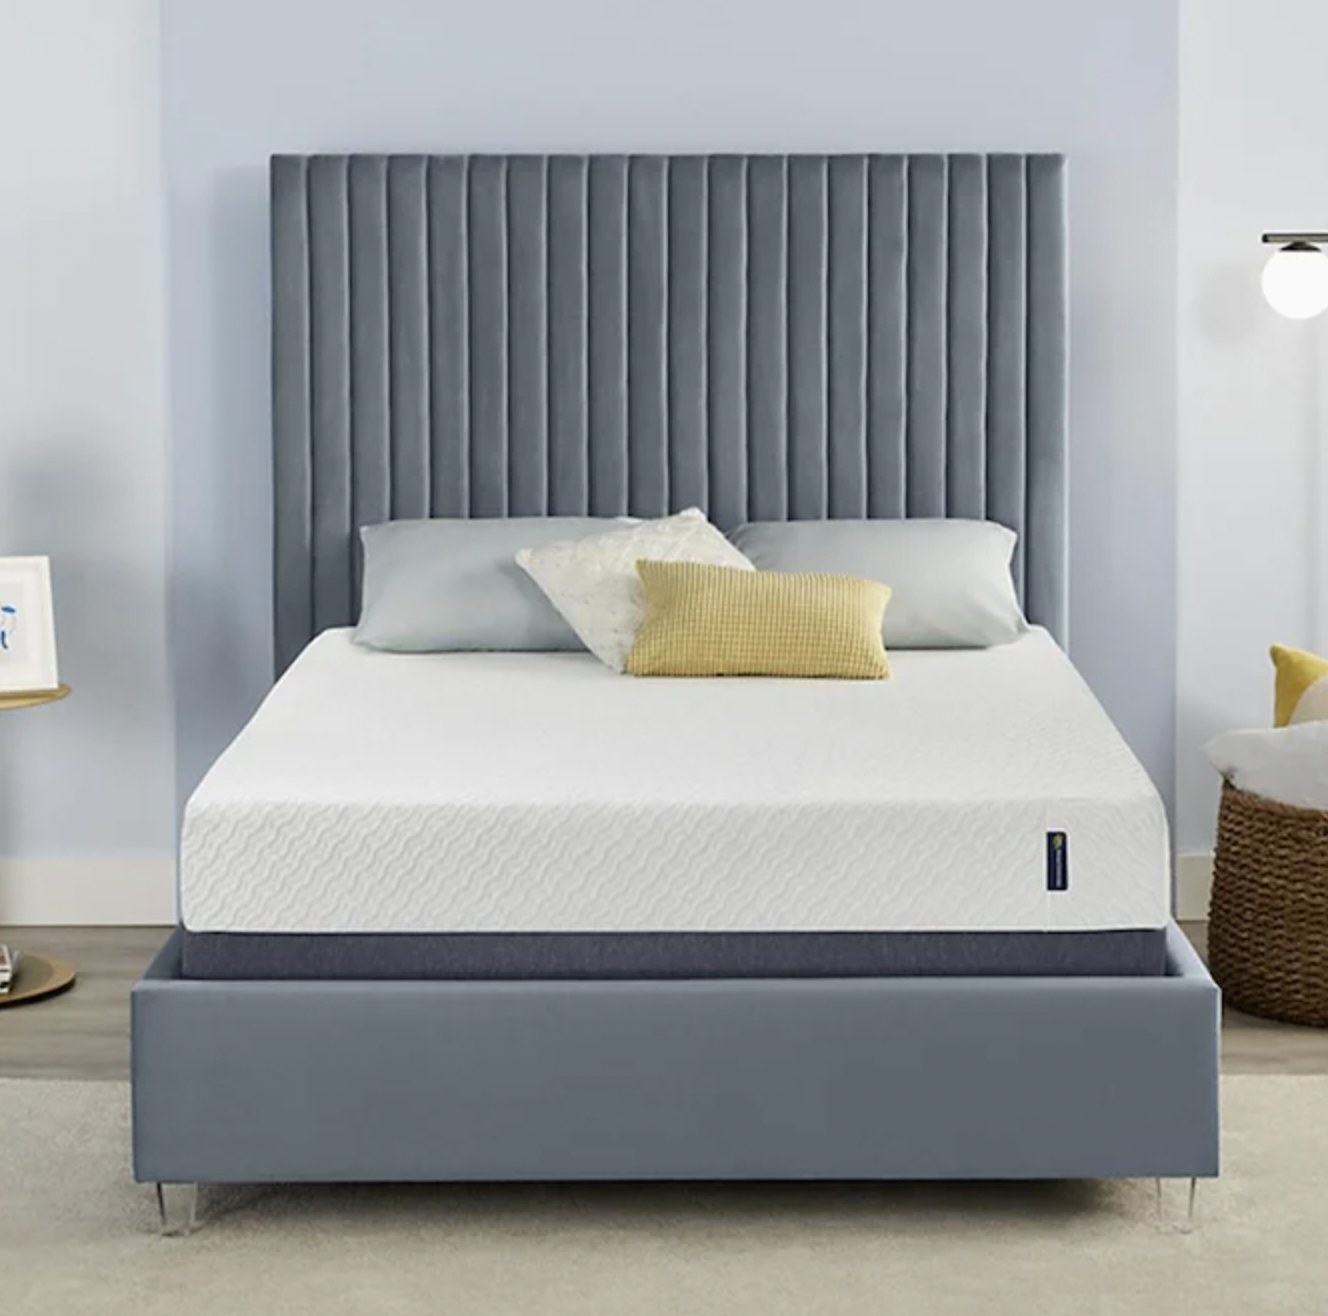 Serta memory foam mattress on blue mattress stand